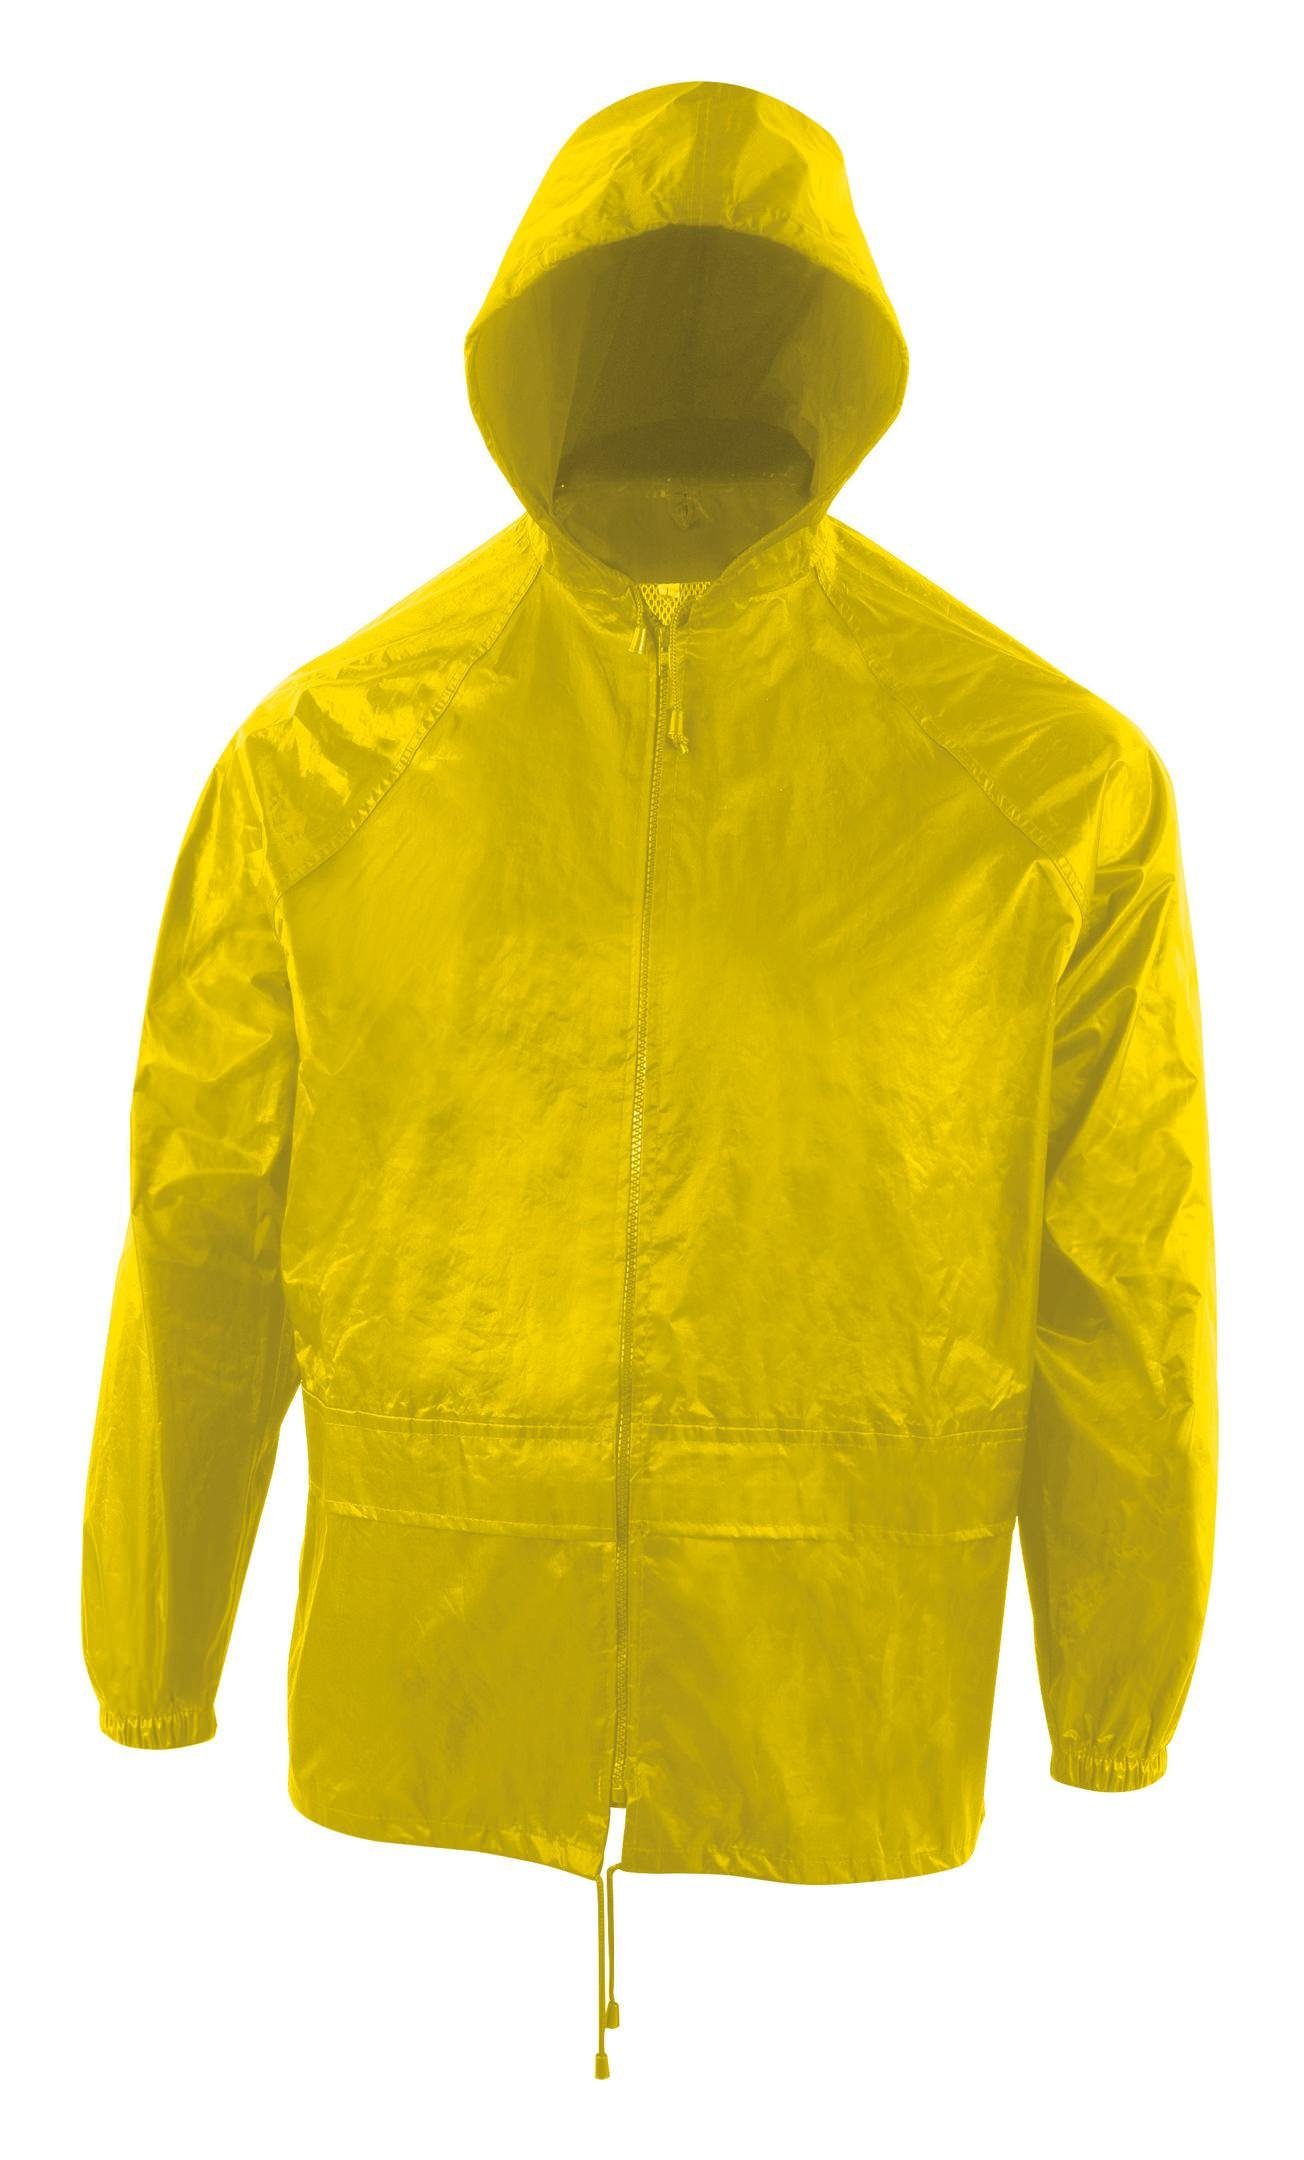 ASATEX Regenanzug, Regenset (Hose / Jacke) Größe XL gelb